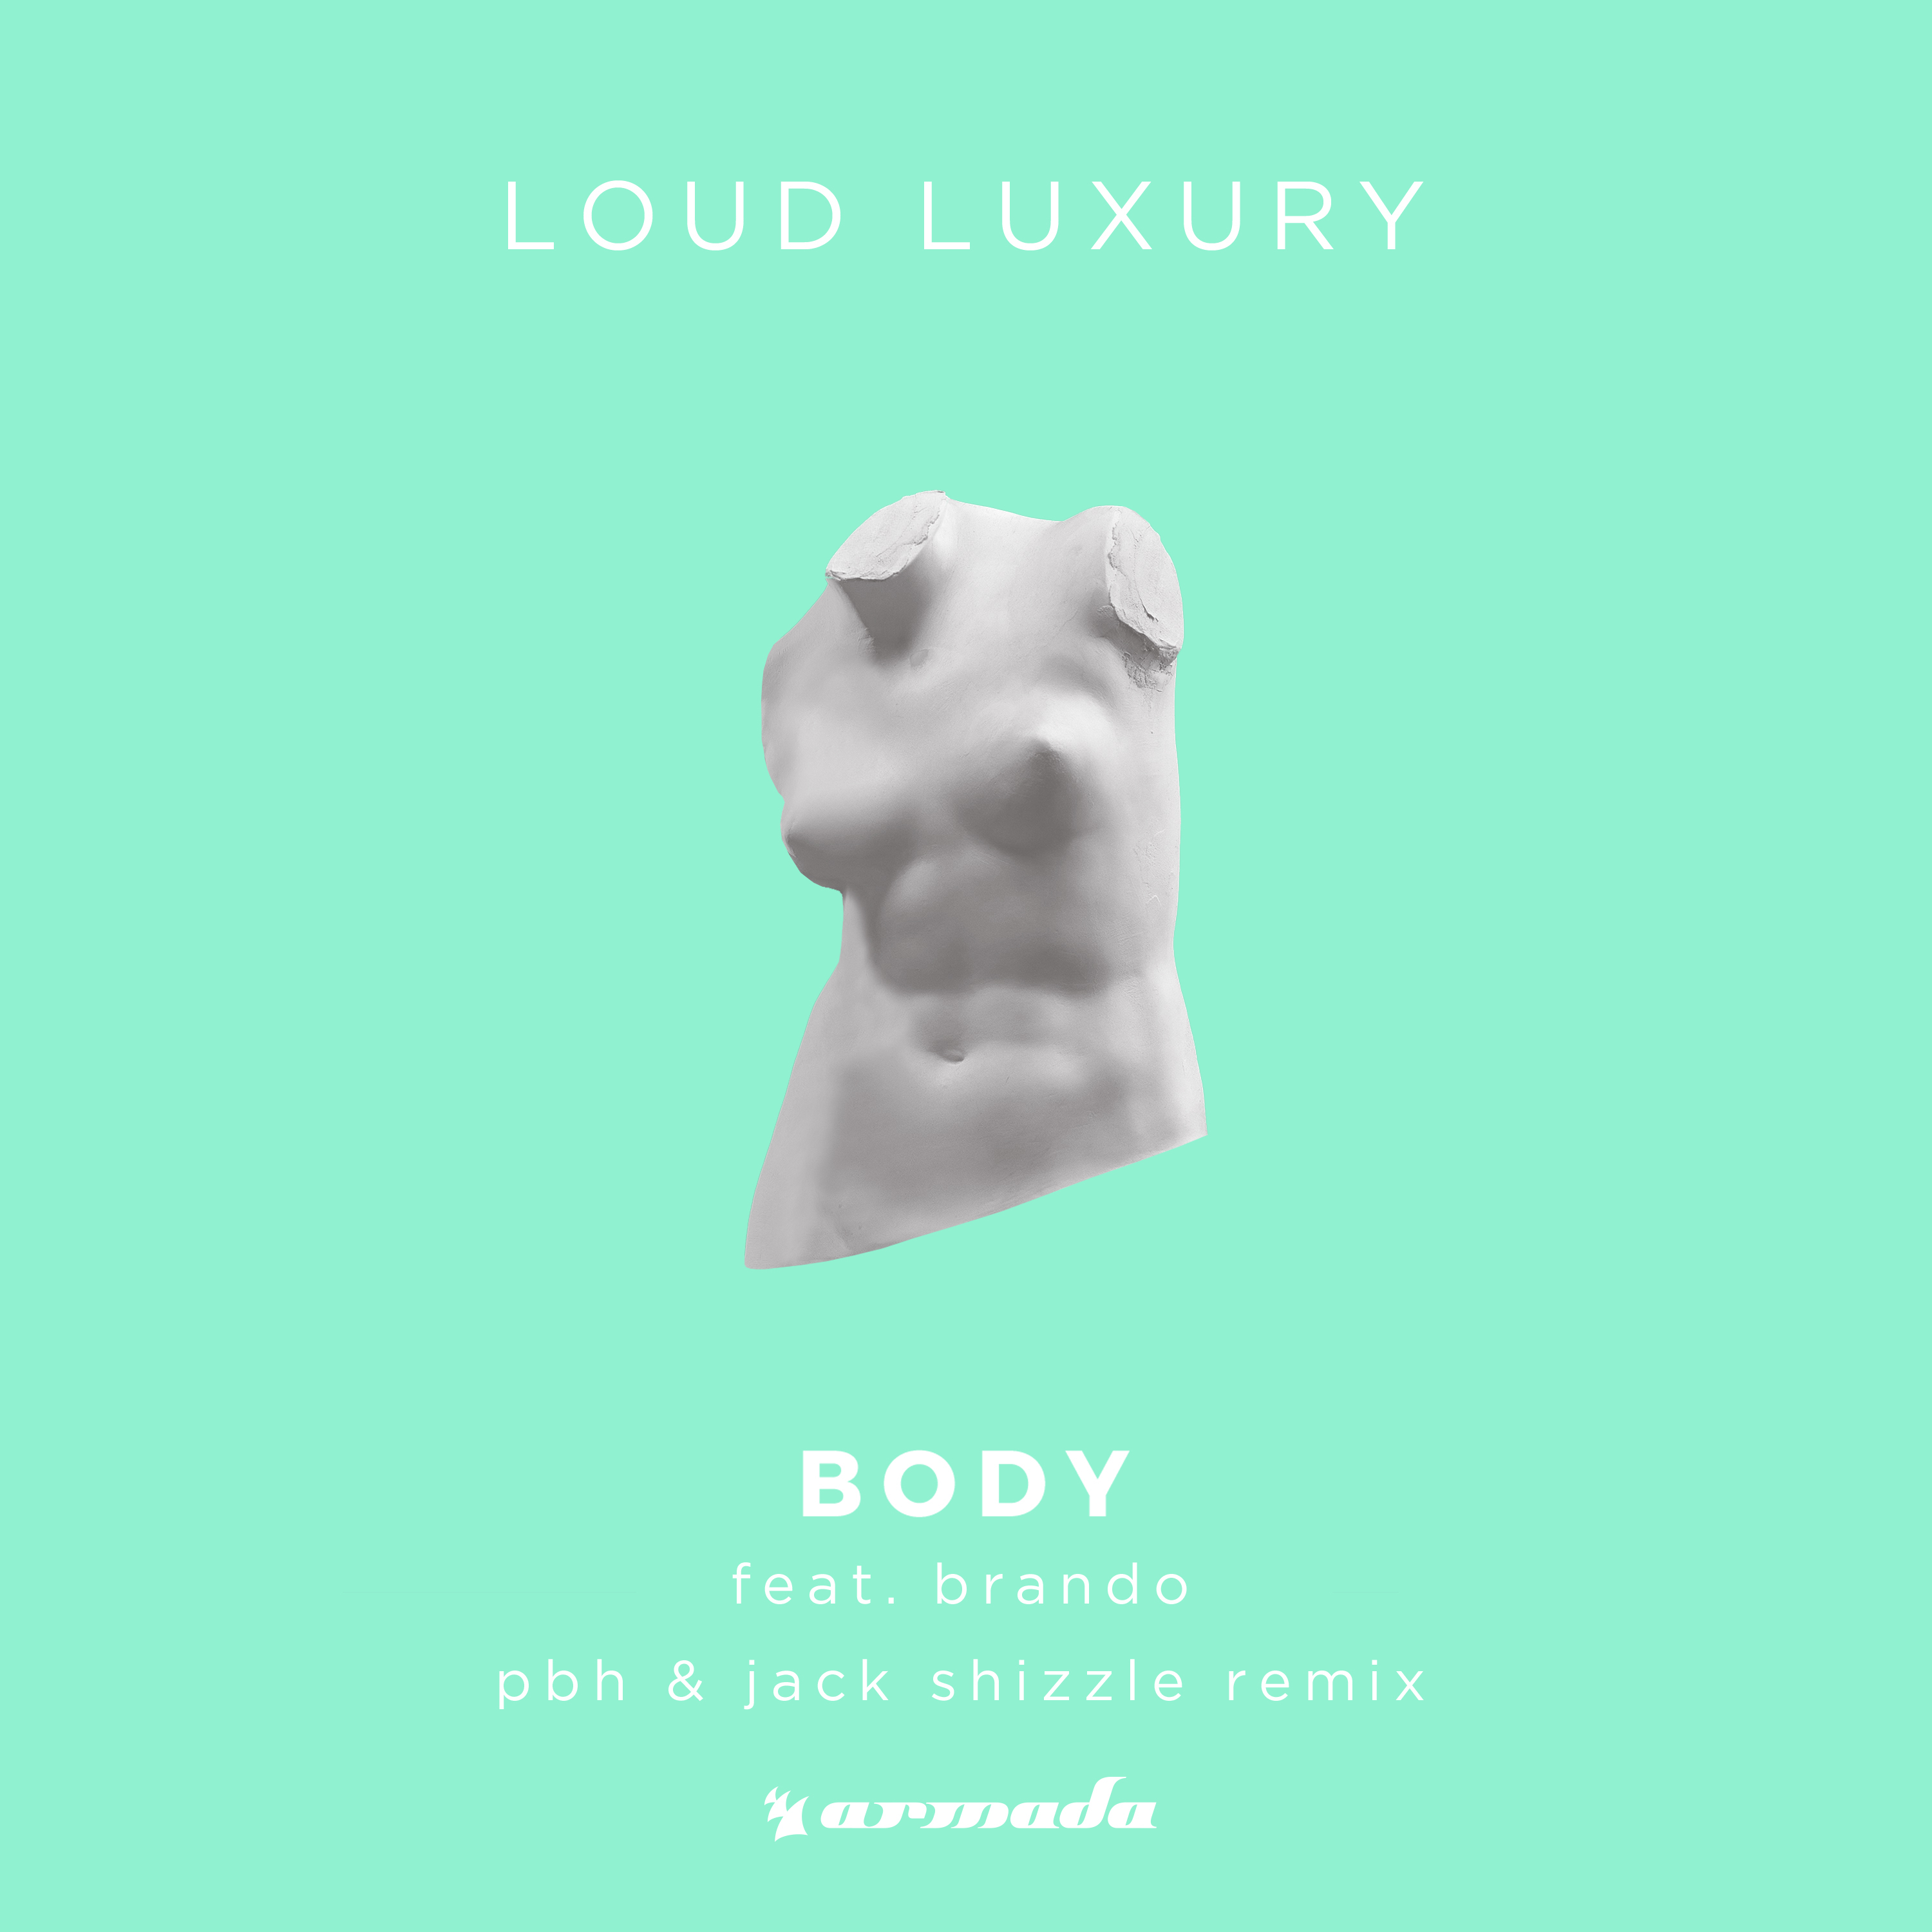 Body (PBH & Jack Shizzle Extended Remix)